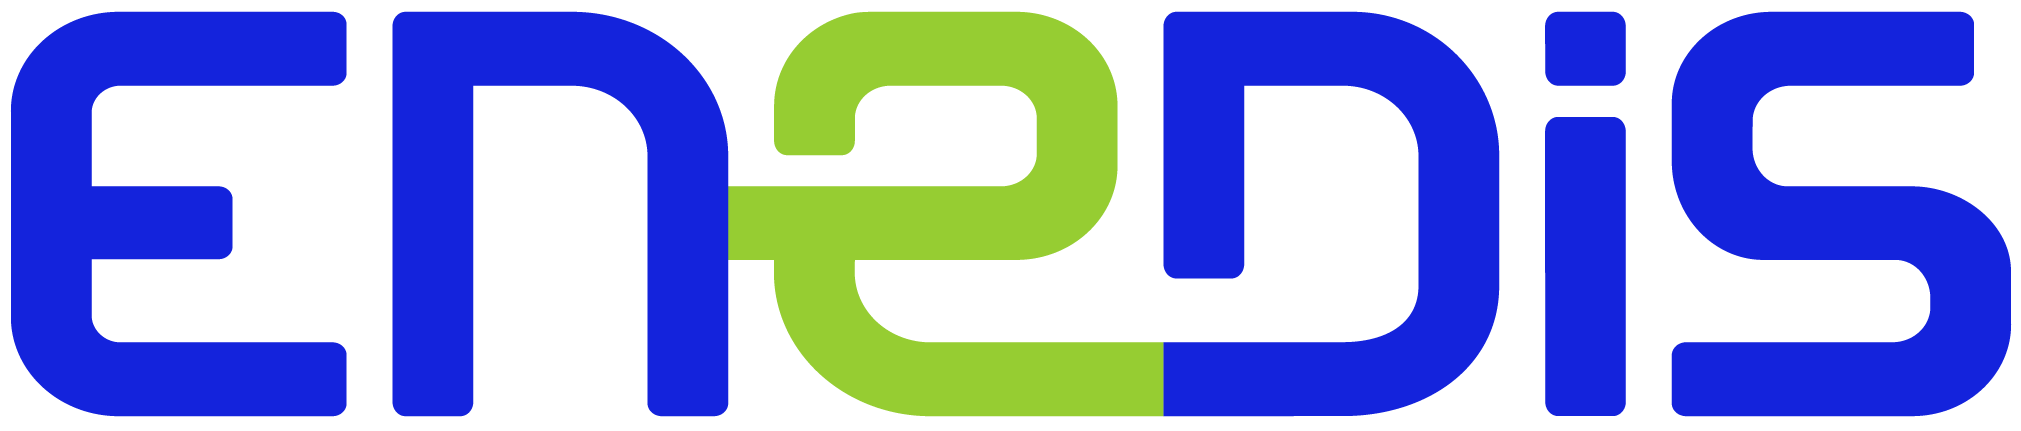 Enedis - Logo